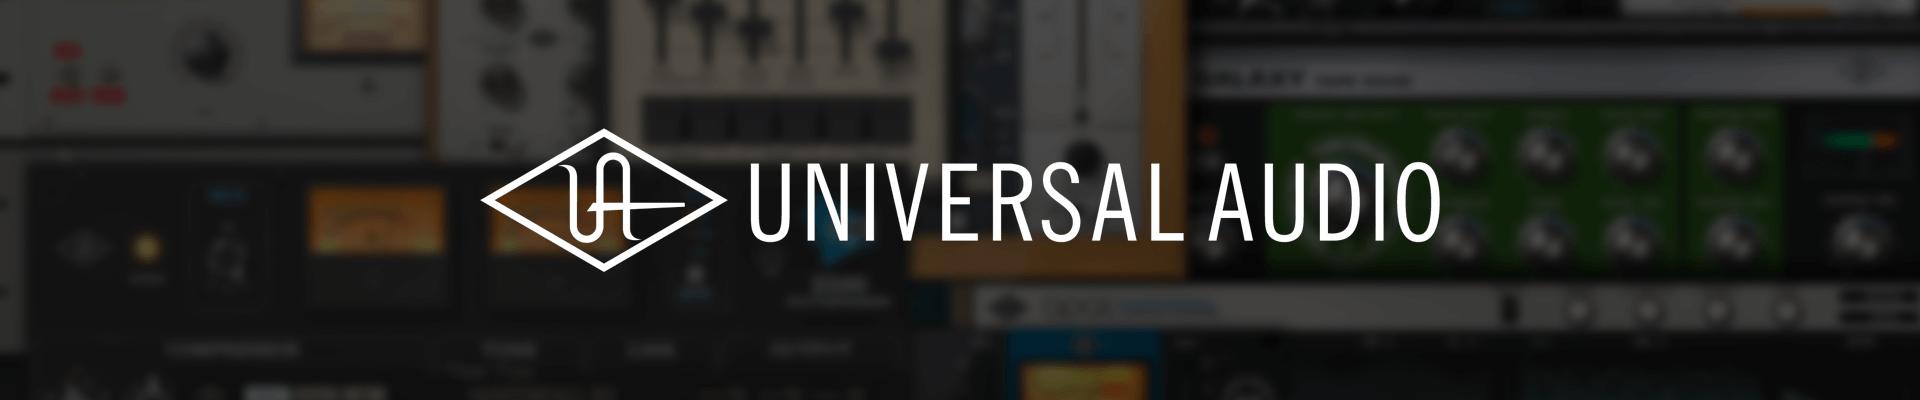 Universal Audio Banner